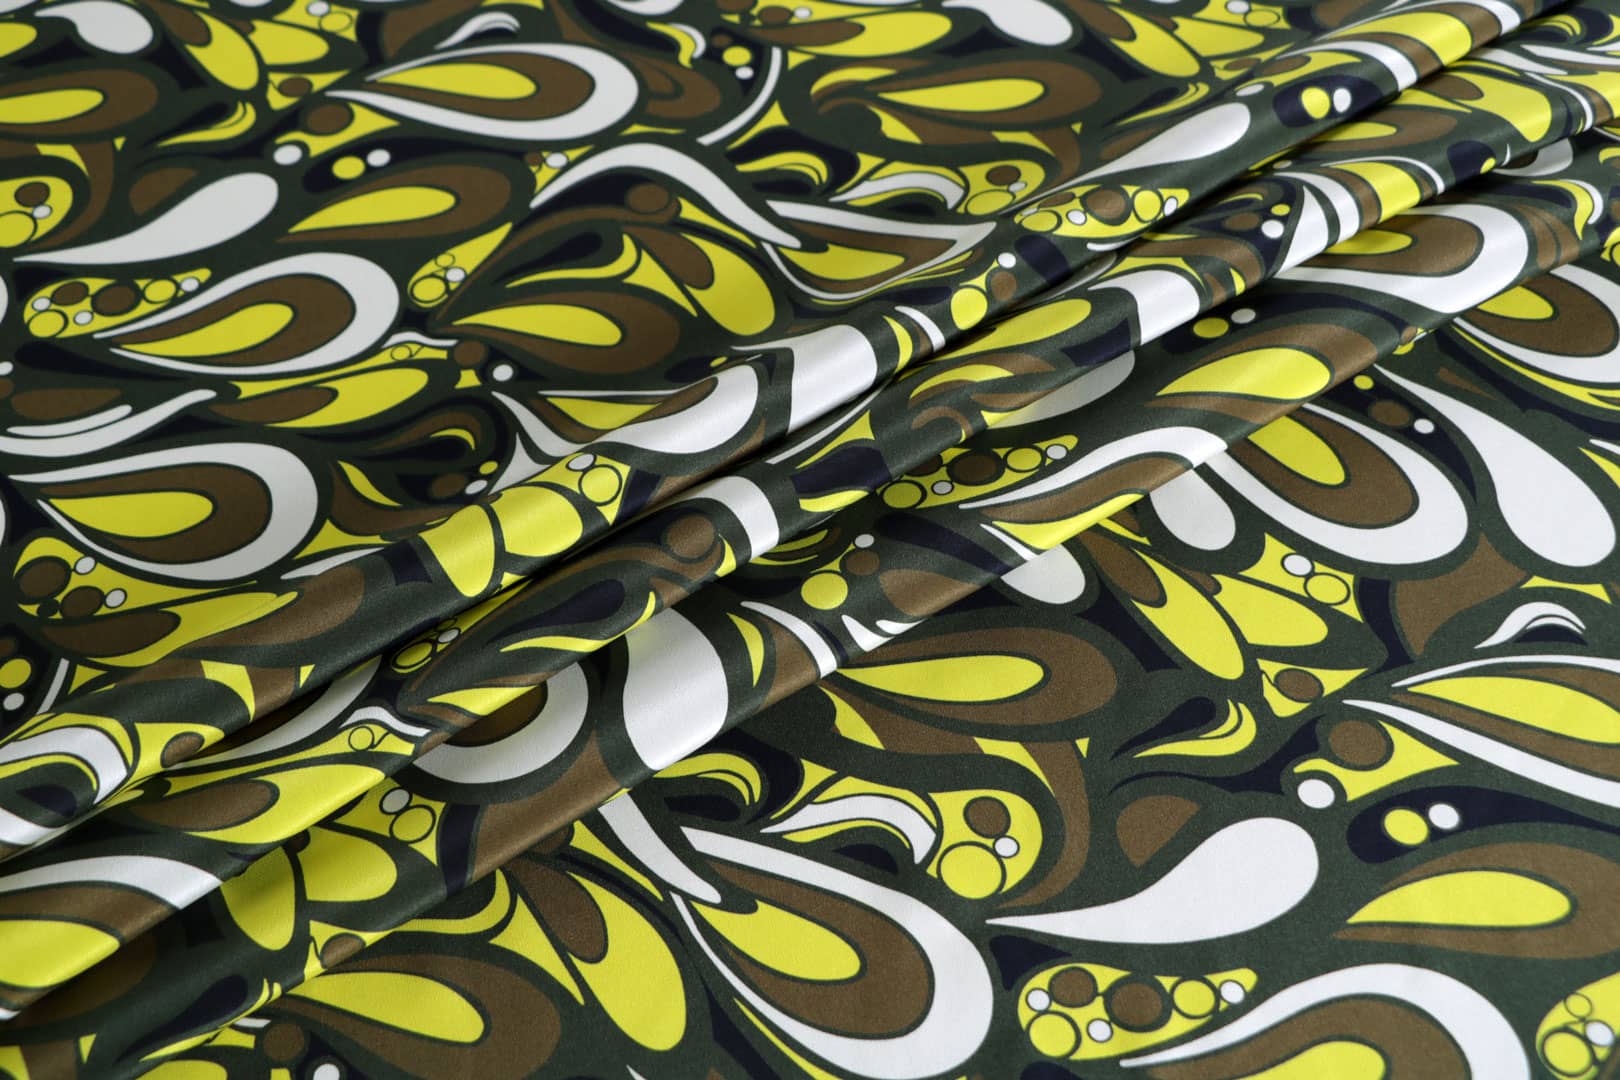 Black, Brown, Green, Yellow Silk Crêpe de Chine fabric for dressmaking